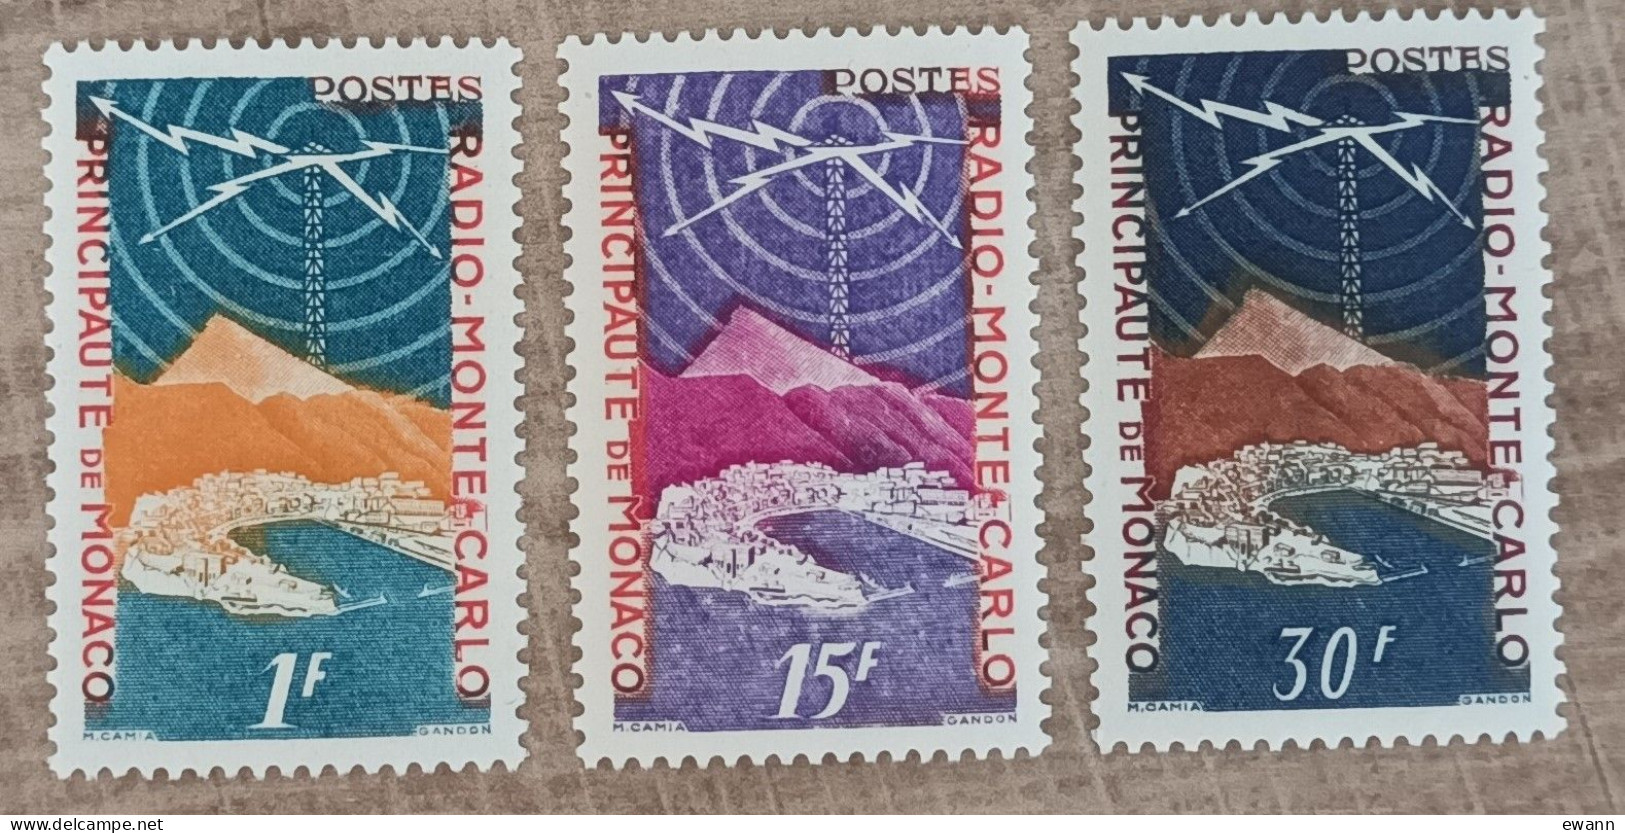 Monaco - YT N°376 à 378 - Radio Monte Carlo - 1951 - Neuf - Unused Stamps